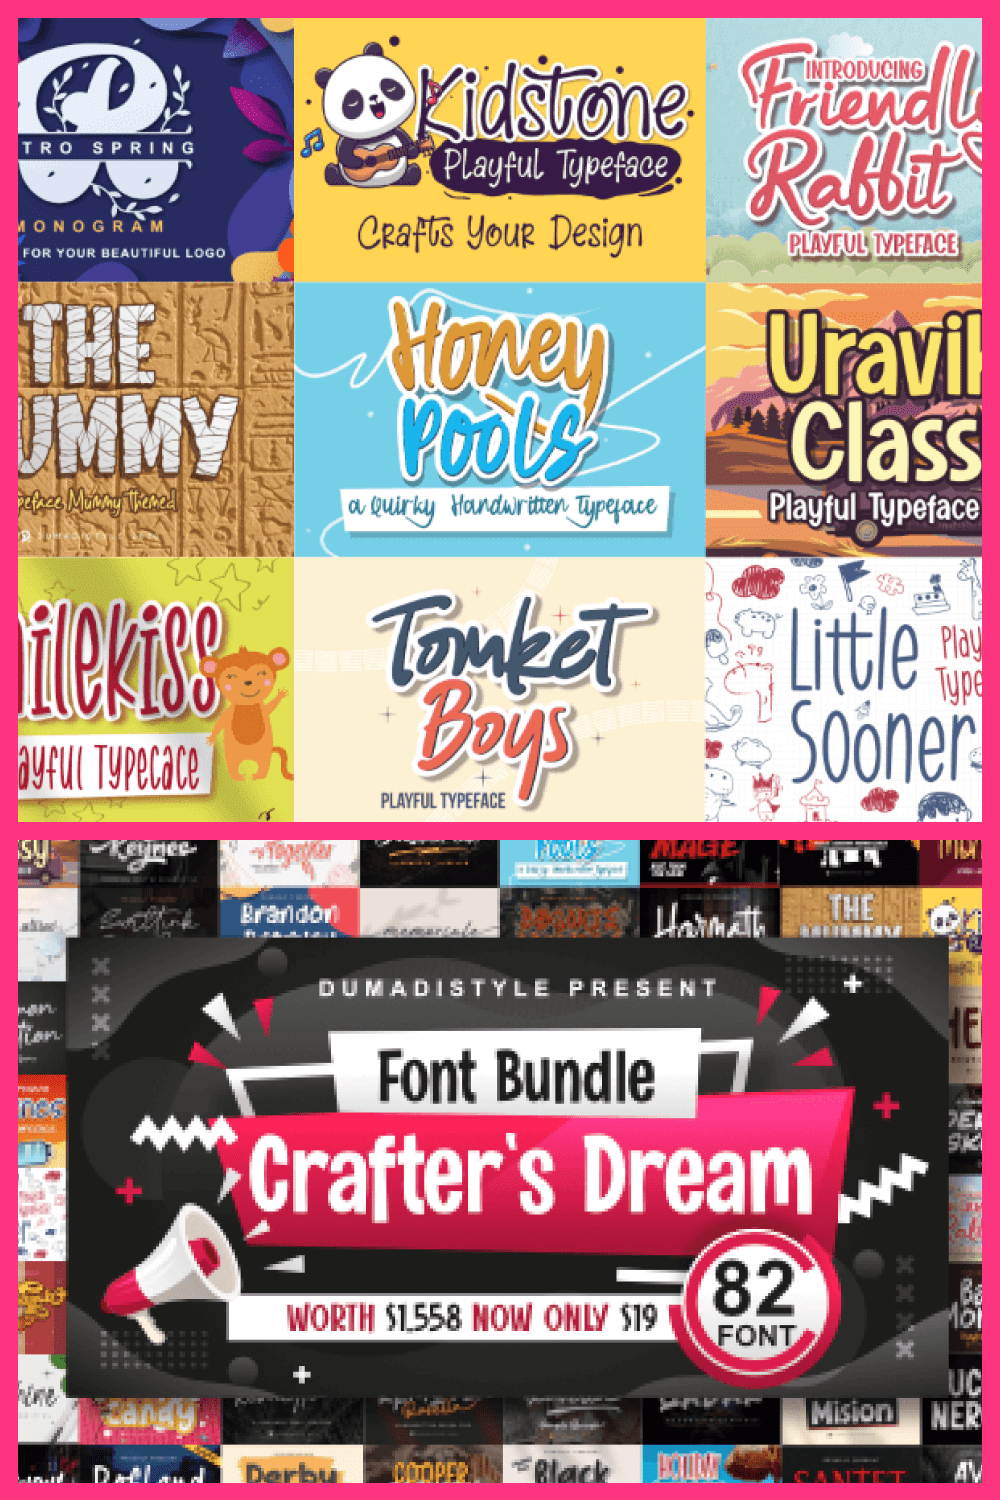 Crafter’s Dream Fonts Bundle: 82 Fonts - MasterBundles - Pinterest Collage Image.